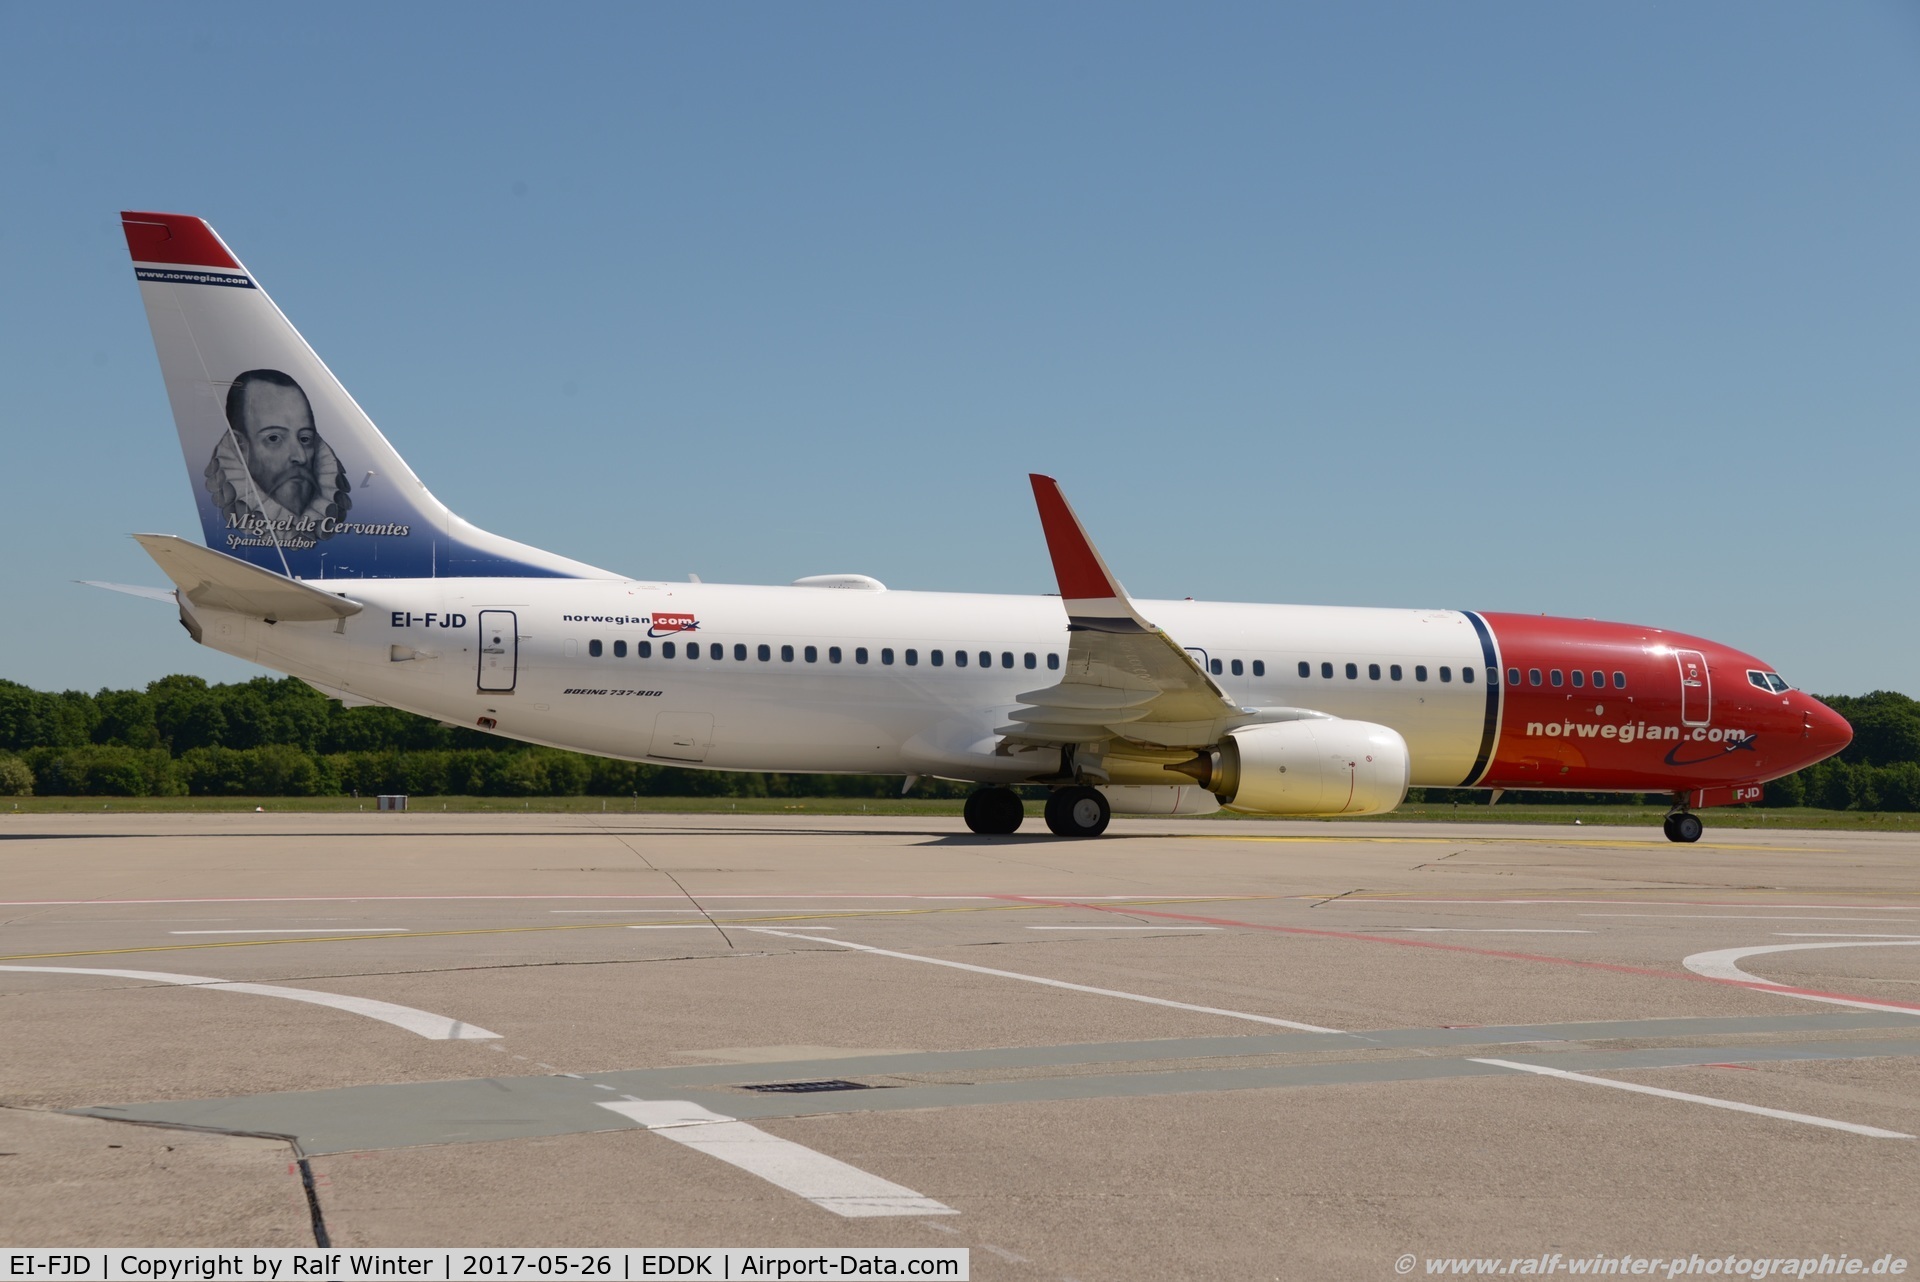 EI-FJD, 2015 Boeing 737-8JP C/N 41143, Boeing 737-8JP(W) - IBK Norwegian Air International 'Miguel De Cervantes' - 41143 - EI-FJD - 26.05.2017 - CGN